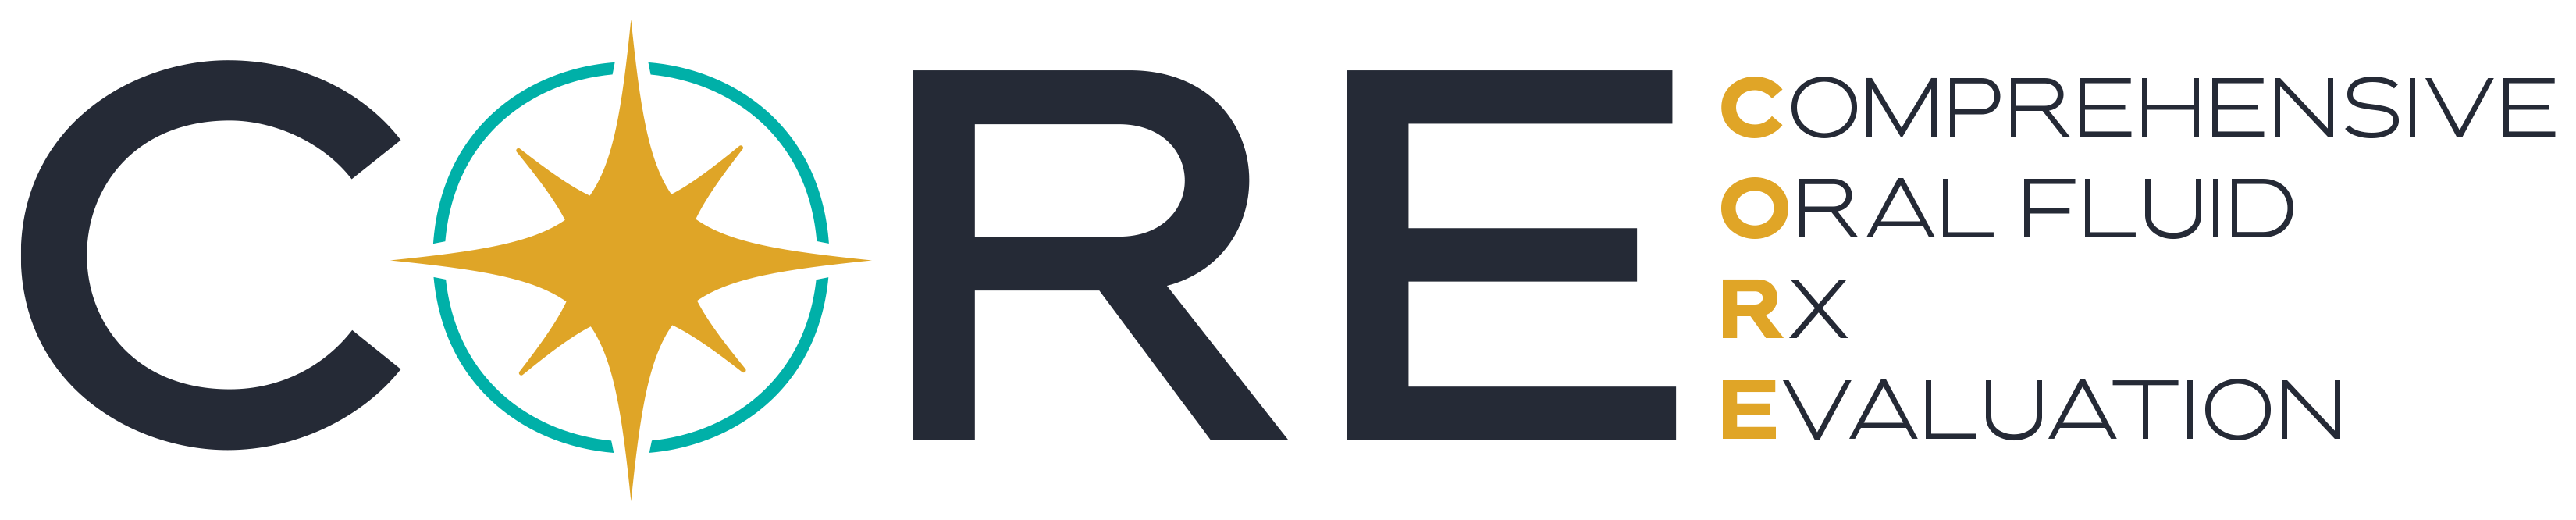 Comprehensive Oral Fluid RX Evaluation (CORE) Logo